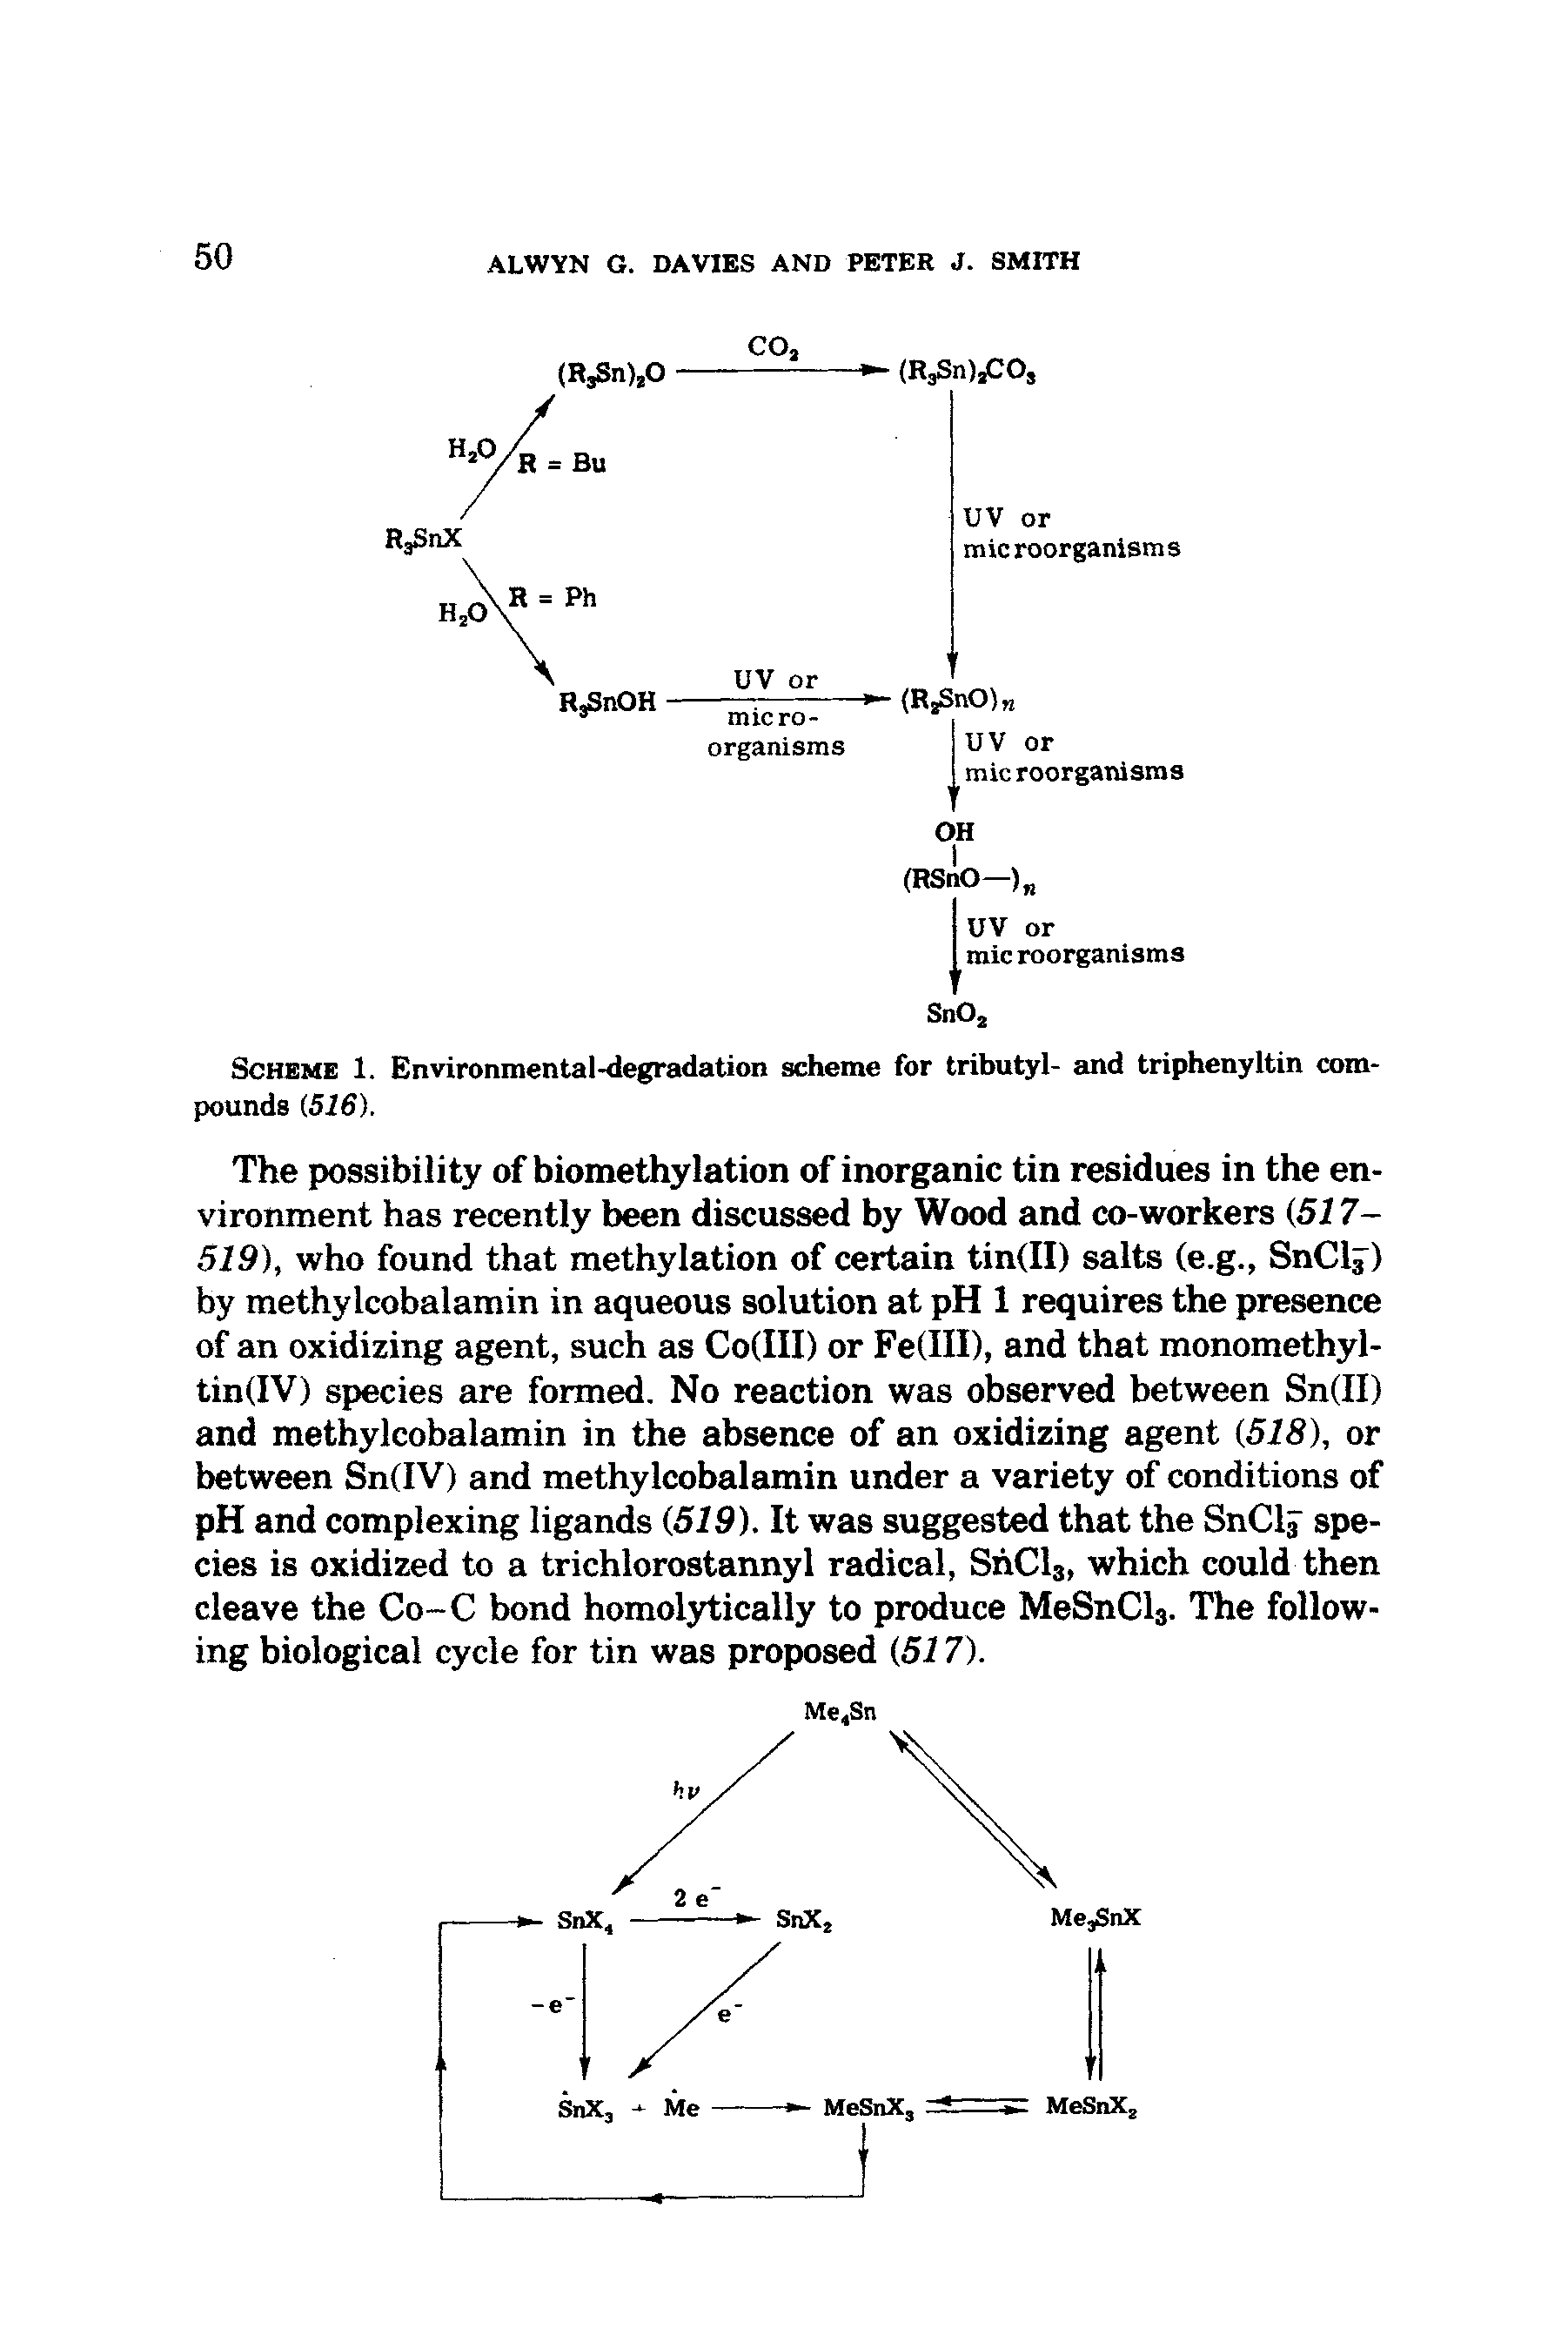 Scheme 1. Environmental-degradation scheme for tributyl- and triphenyltin compounds (.516).